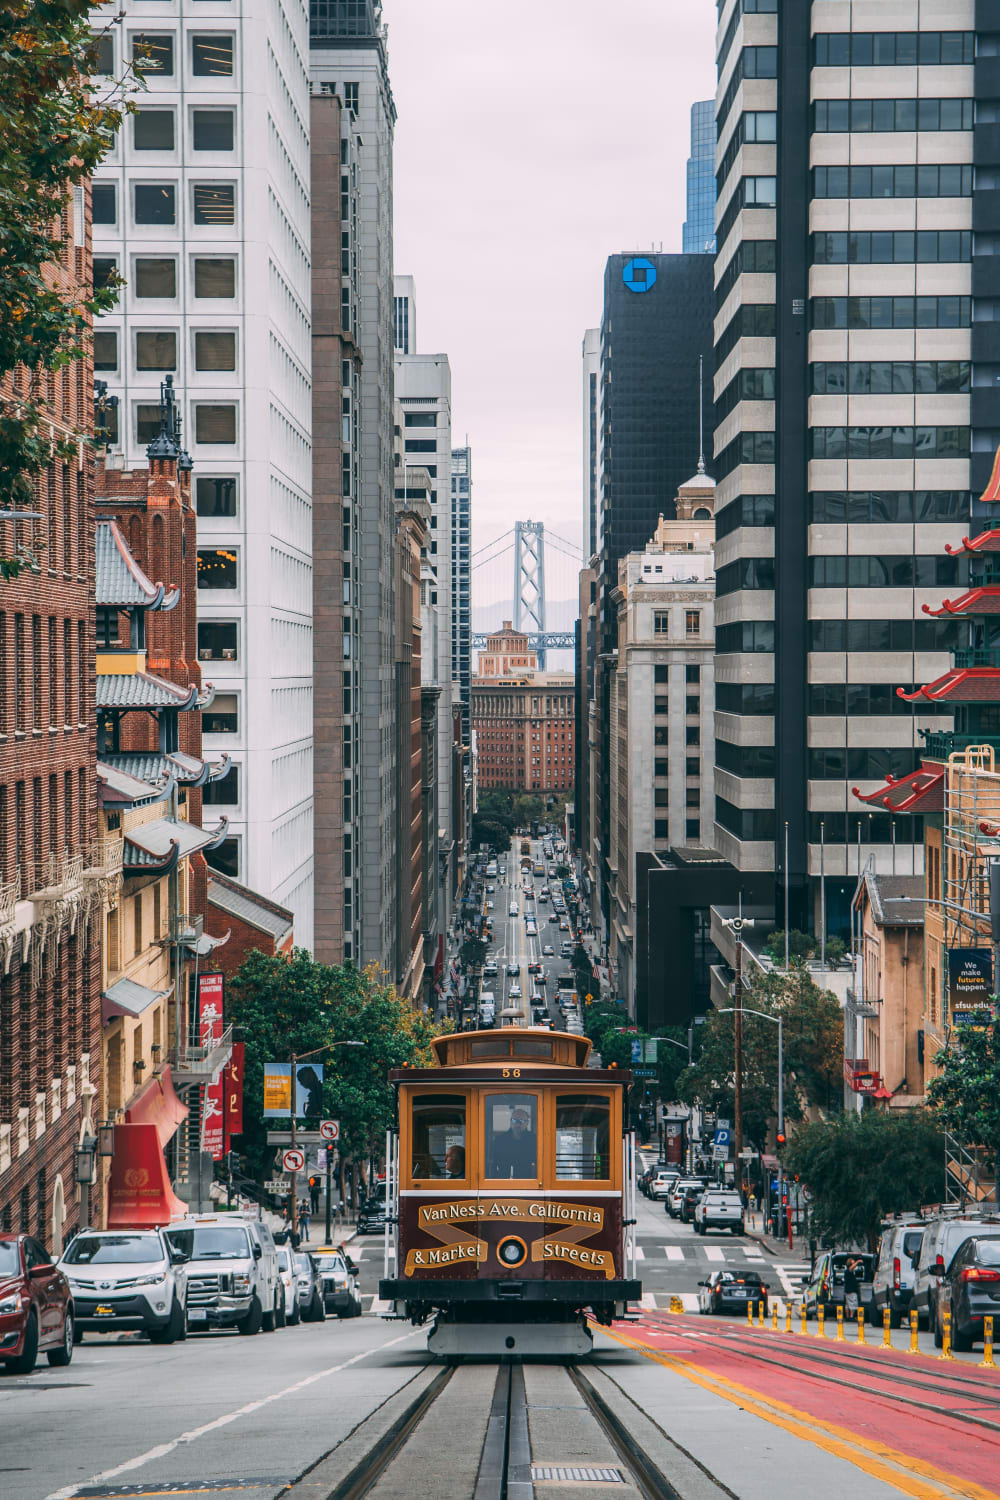 The famous San Francisco Tram